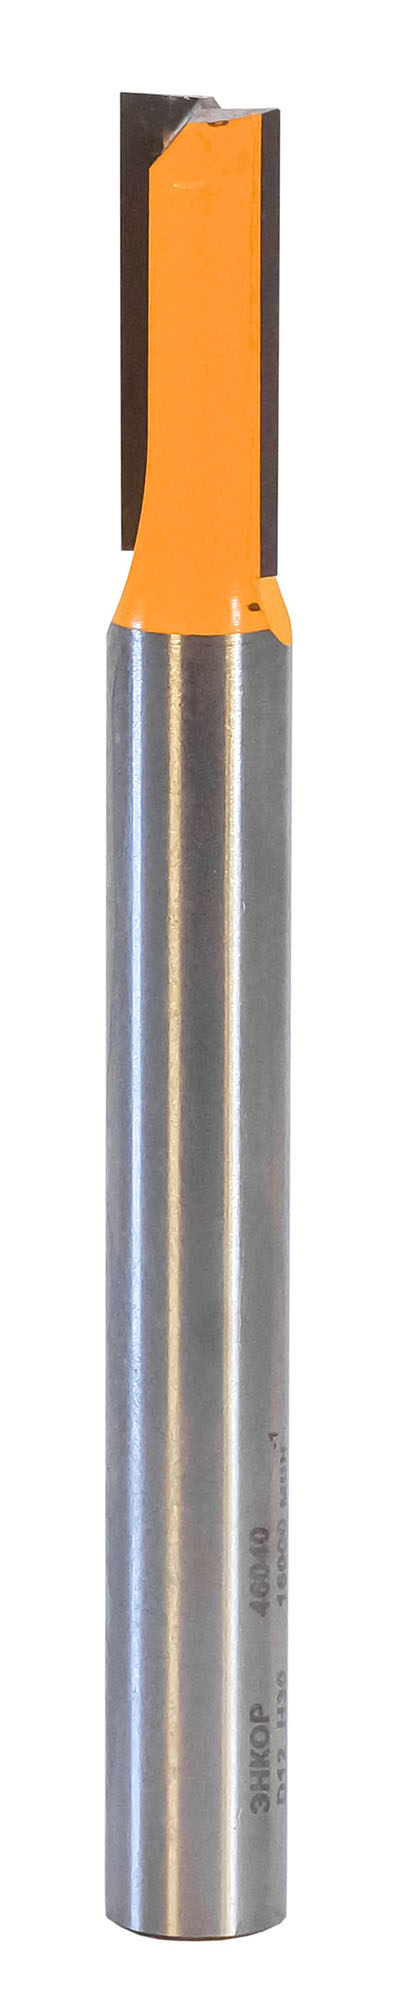 Фреза пазовая прямая прорезная (Ø 12х30x120 мм хвостовик 12мм) по дереву Энкор (46040)